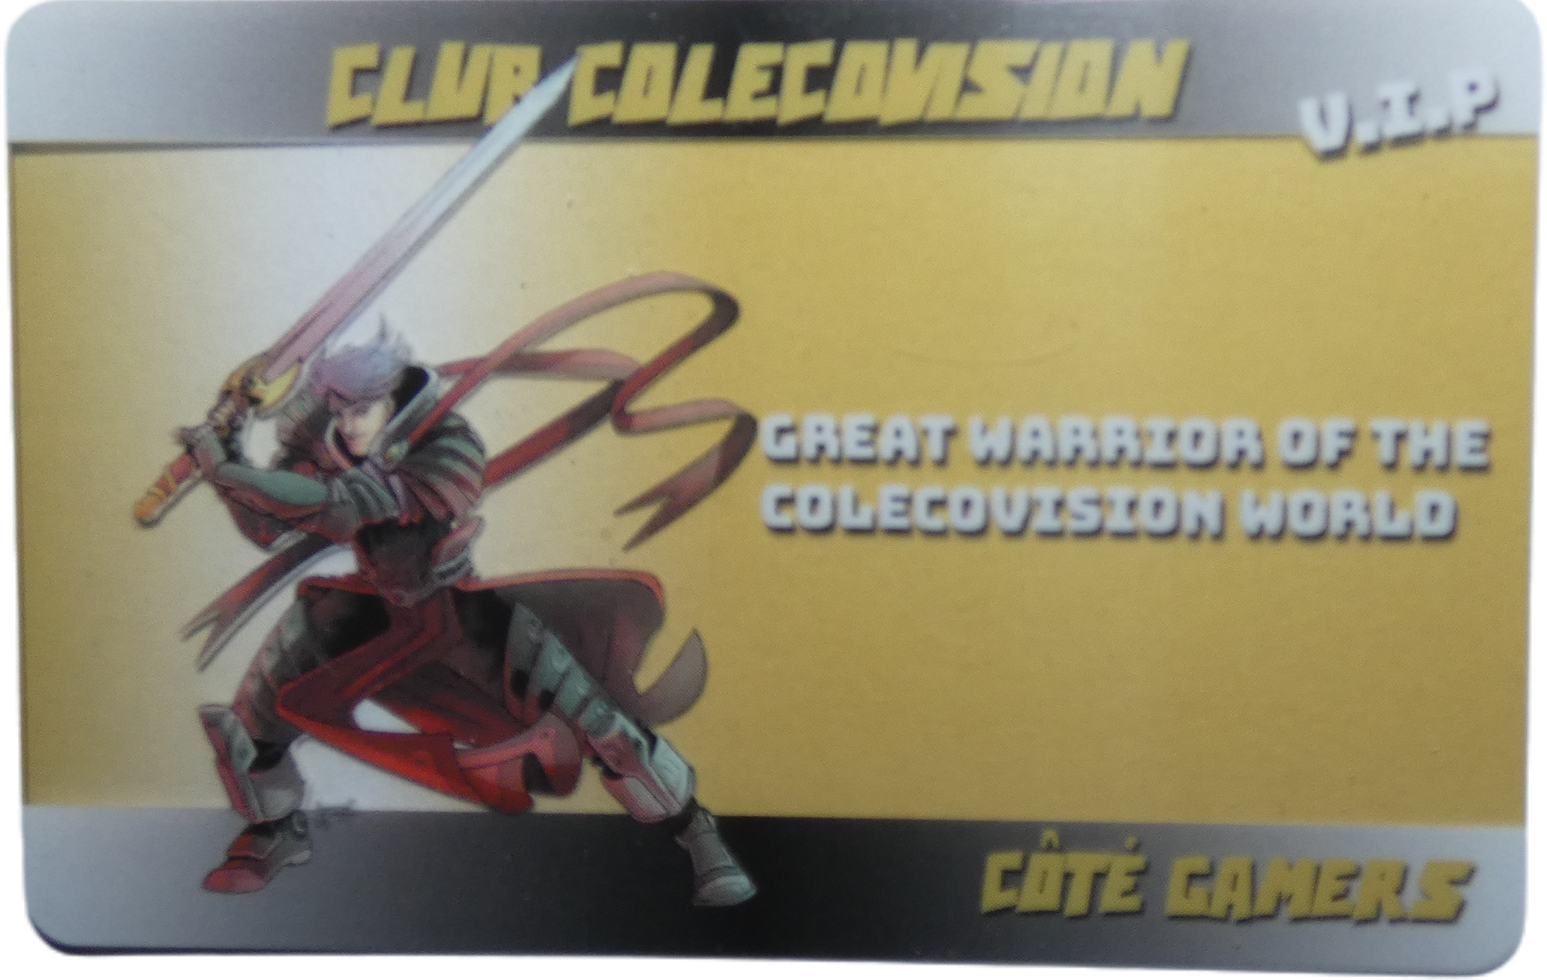 Club ColecoVision, carte de membre